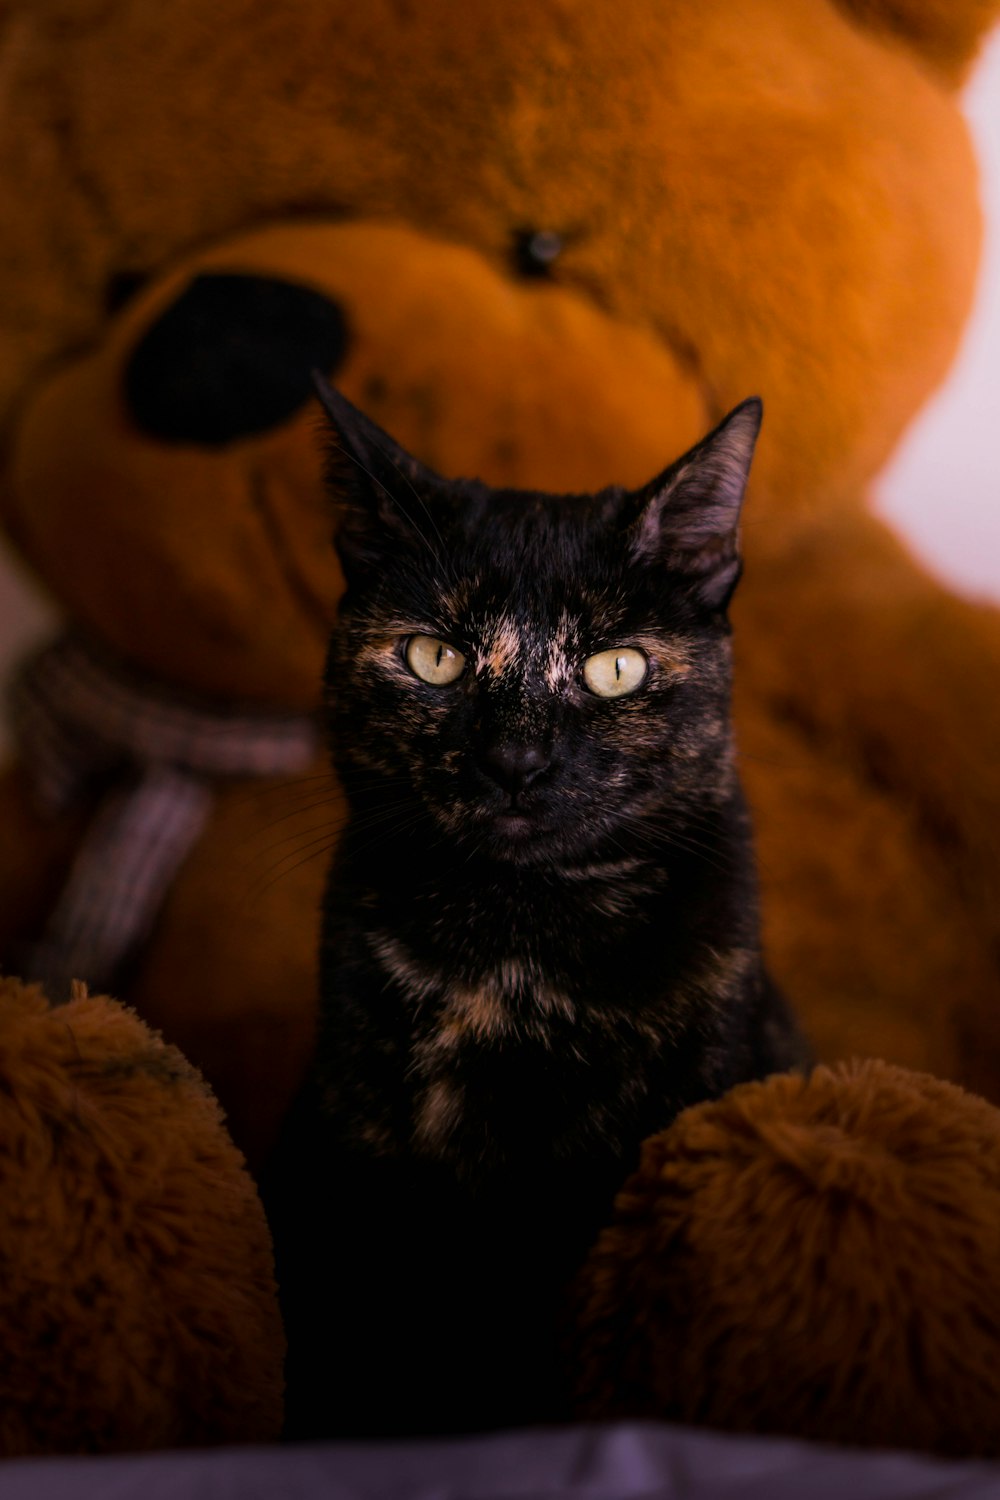 a black cat sitting next to a brown teddy bear